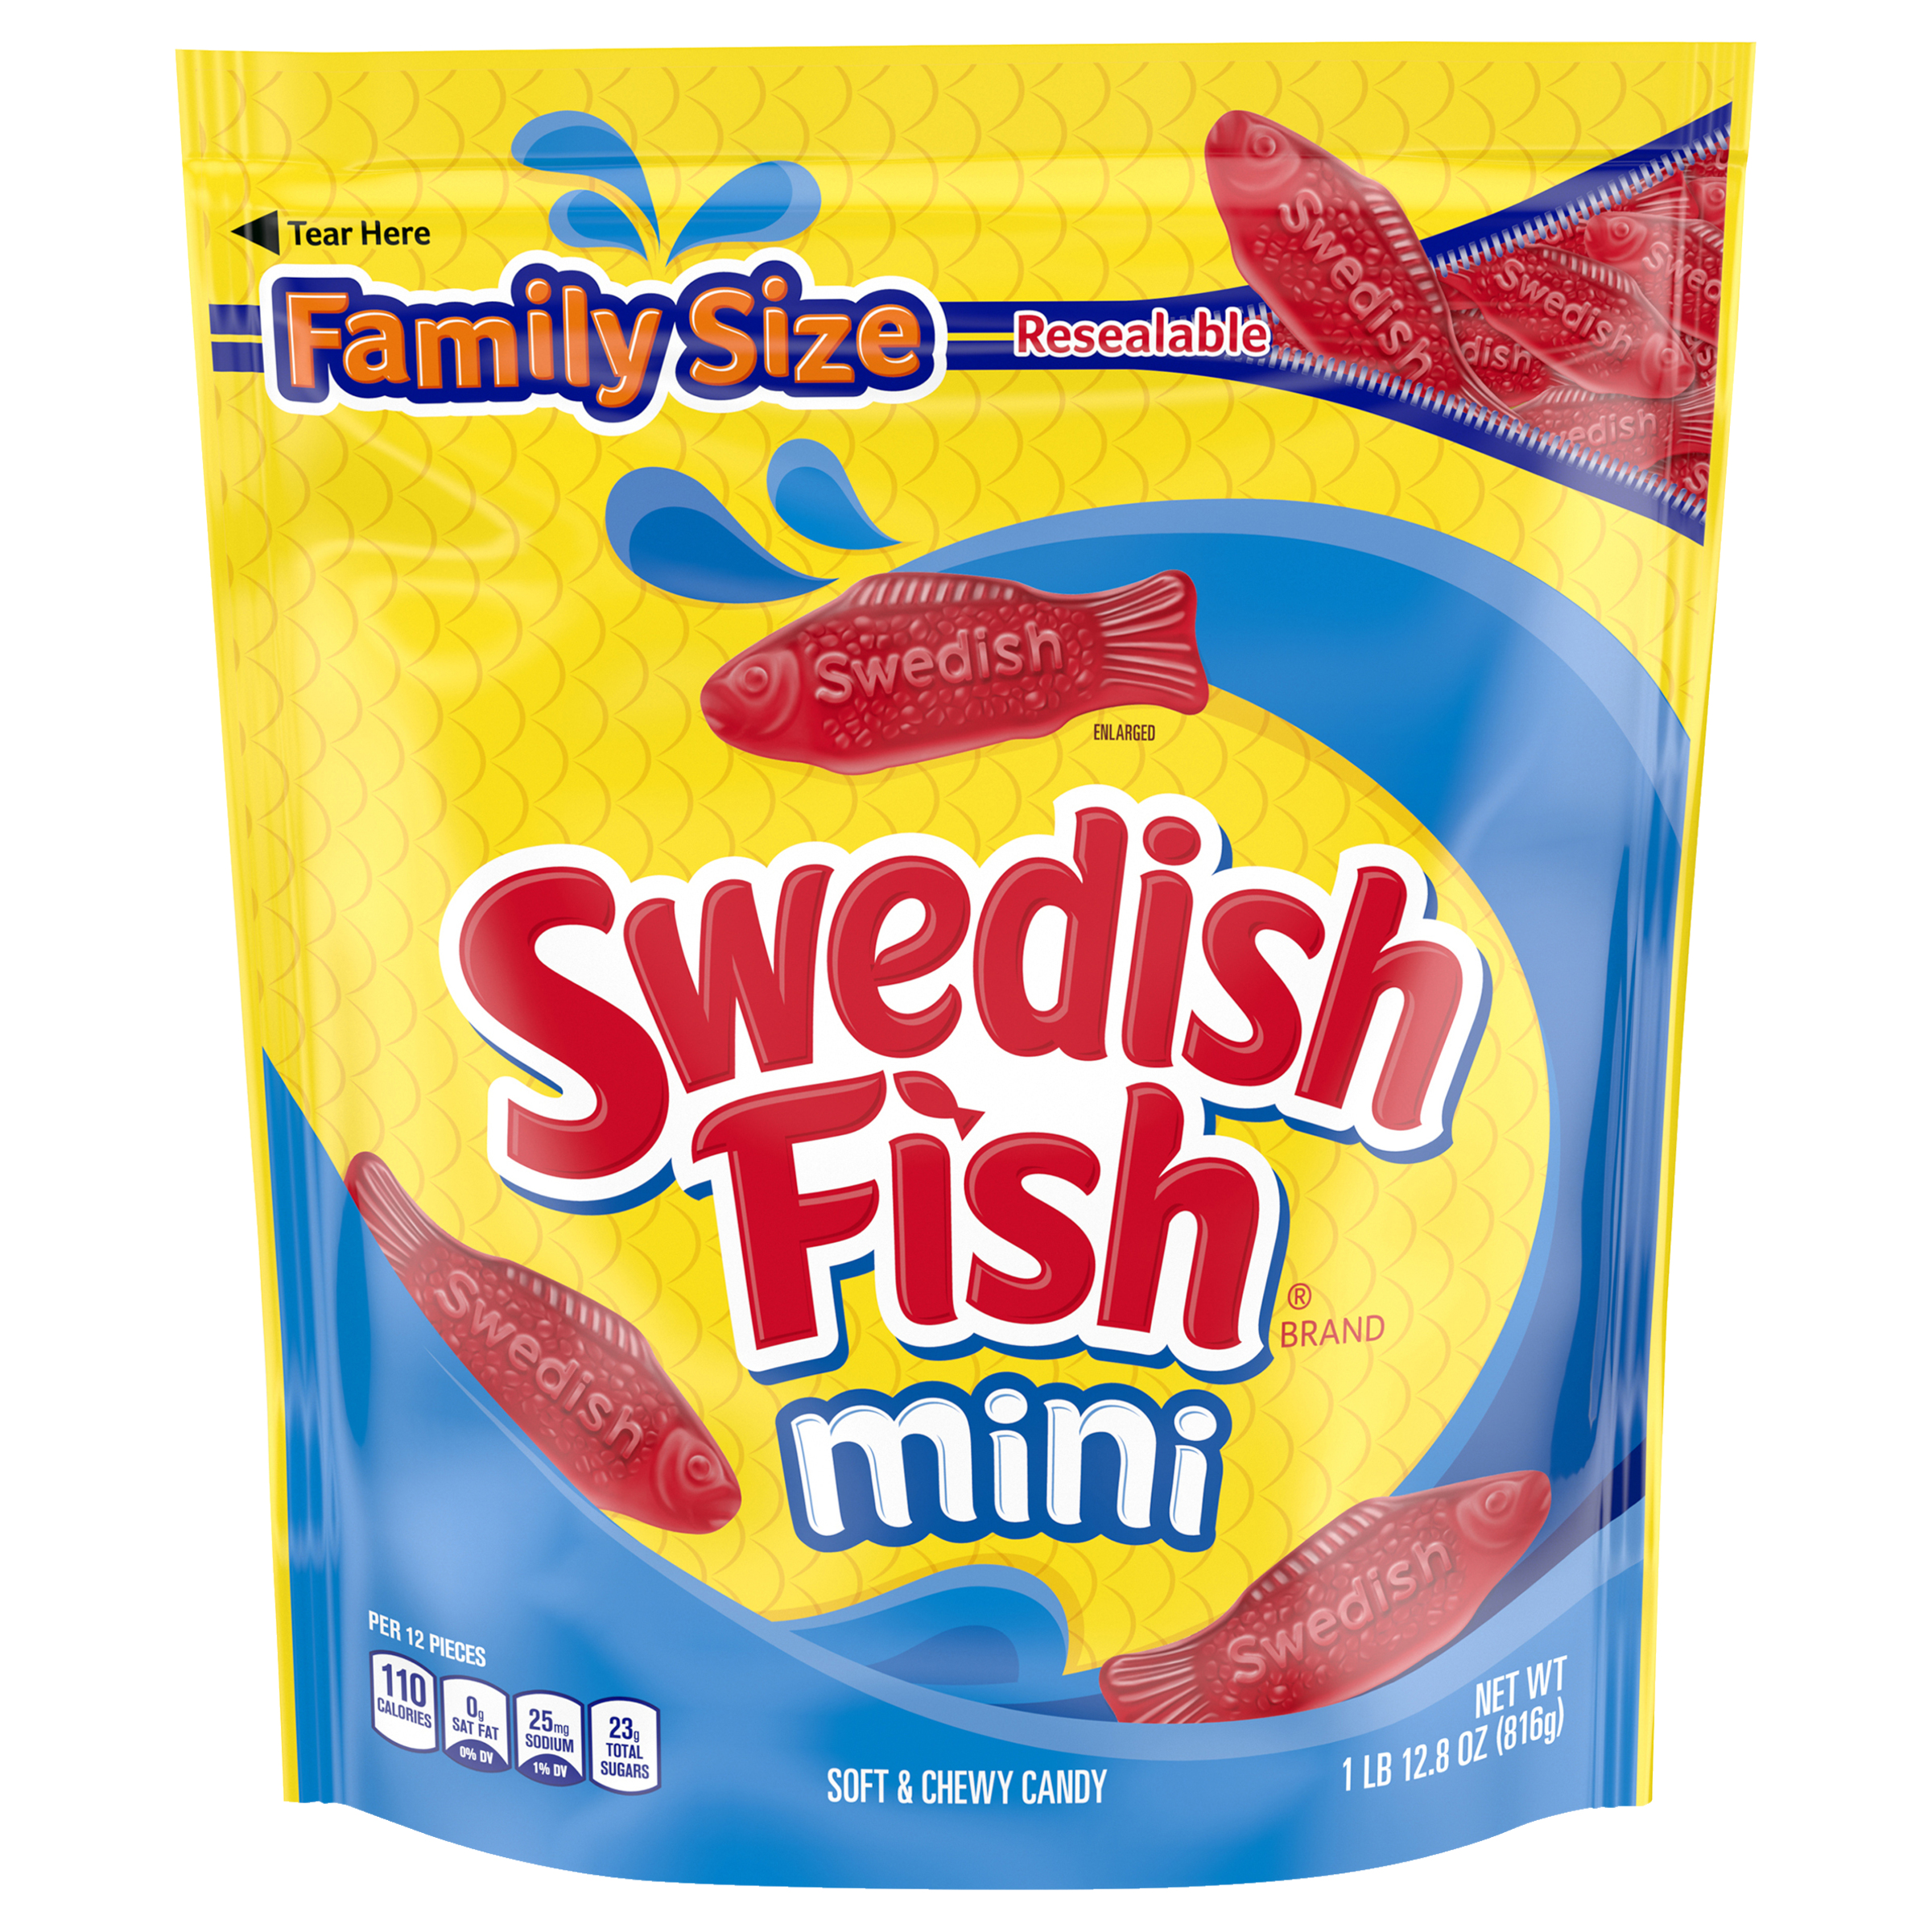 SWEDISH FISH Mini Soft & Chewy Candy, Family Size, 1.8 lb